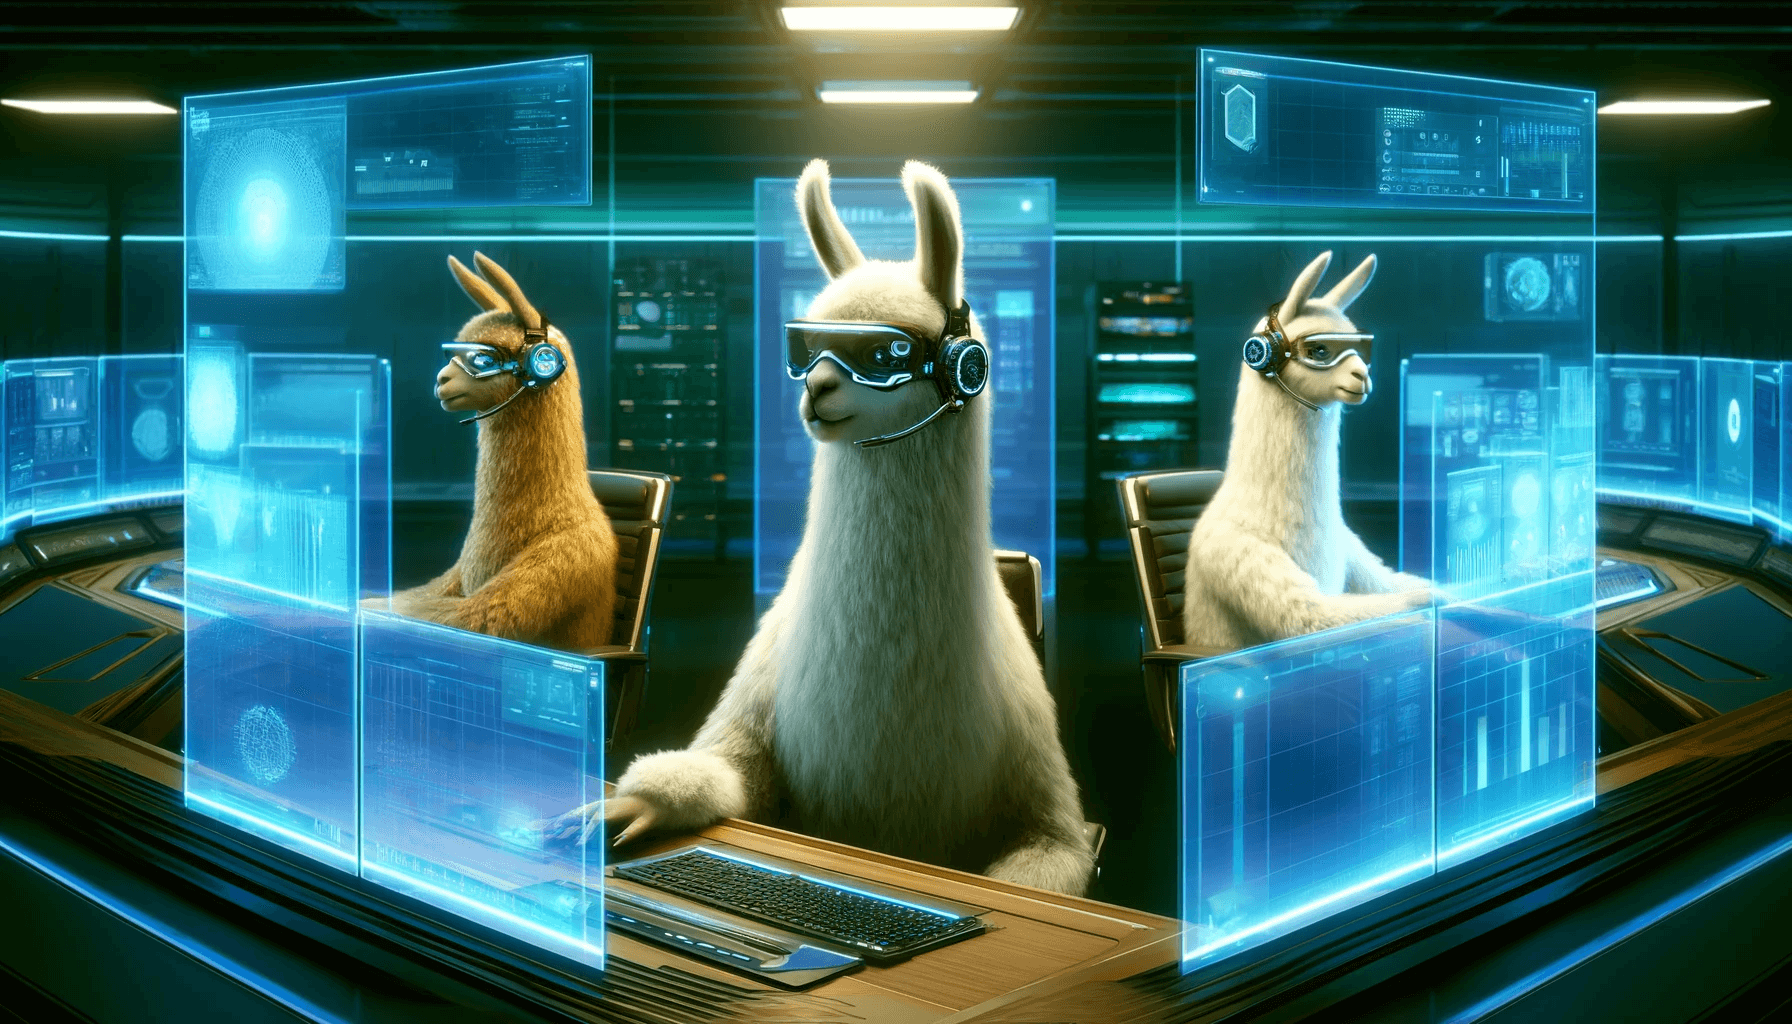 Llama agents analyzing cryptocurrencies